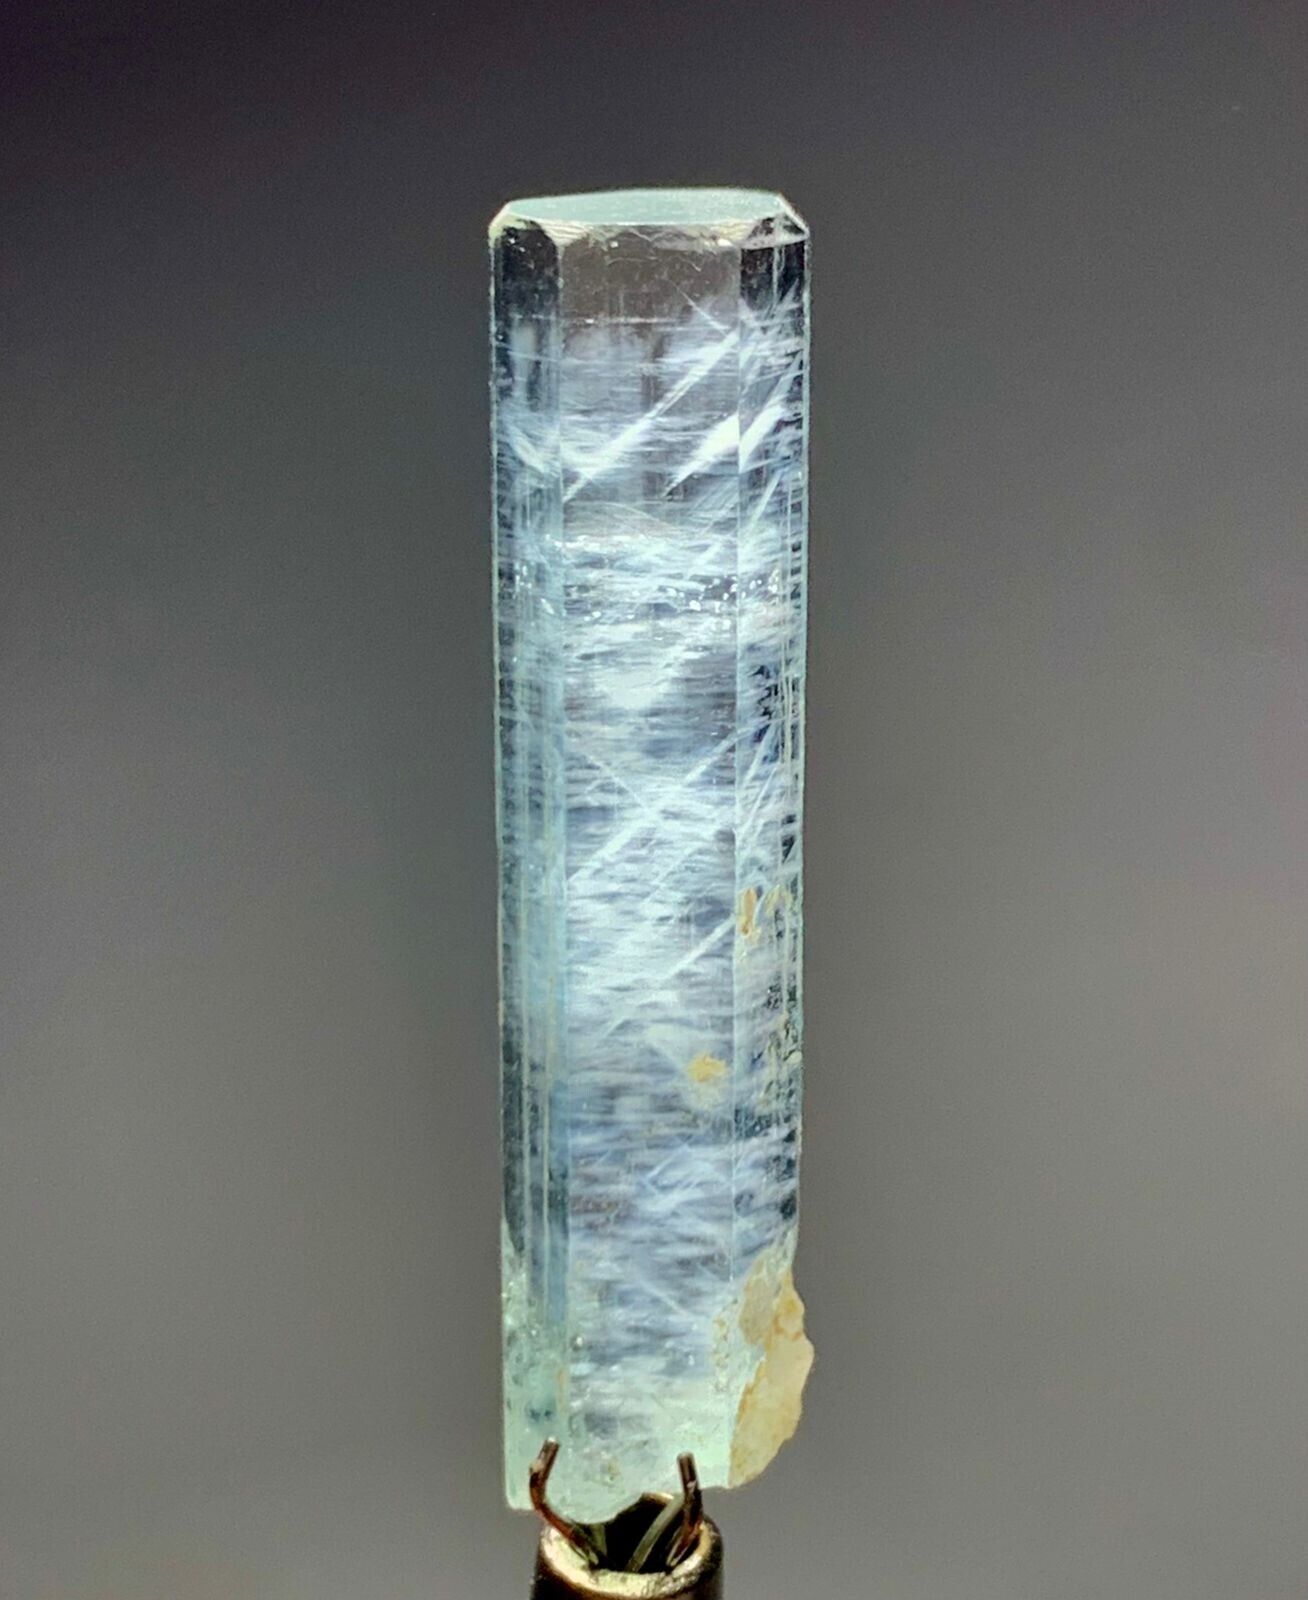 14 Cts Beautiful Top Quality Terminated Aquamarine Crystal from Skardu Pakistan